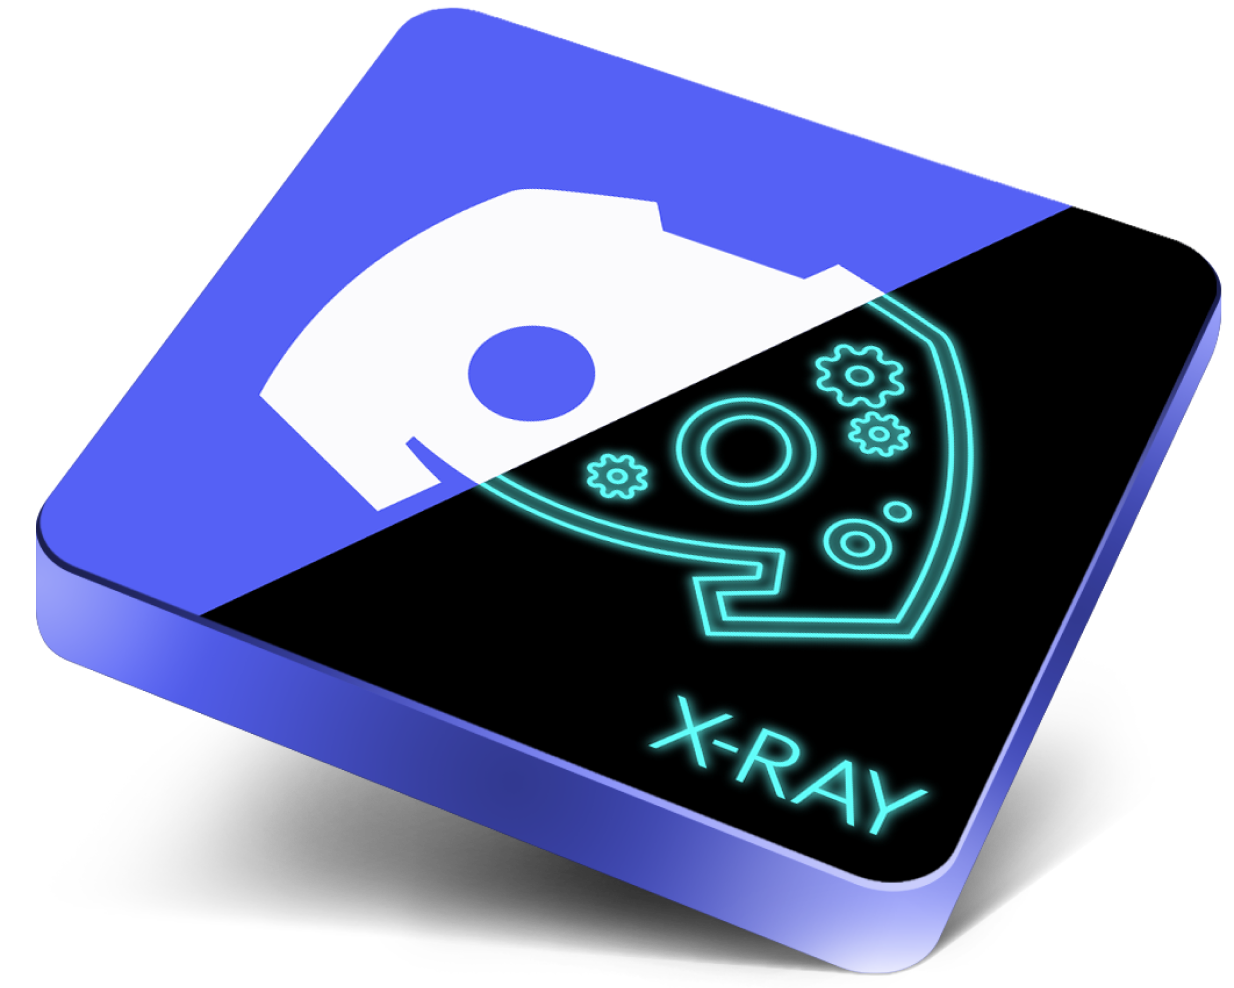 X-Ray Hero Image - Dig deep into app classification intelligence